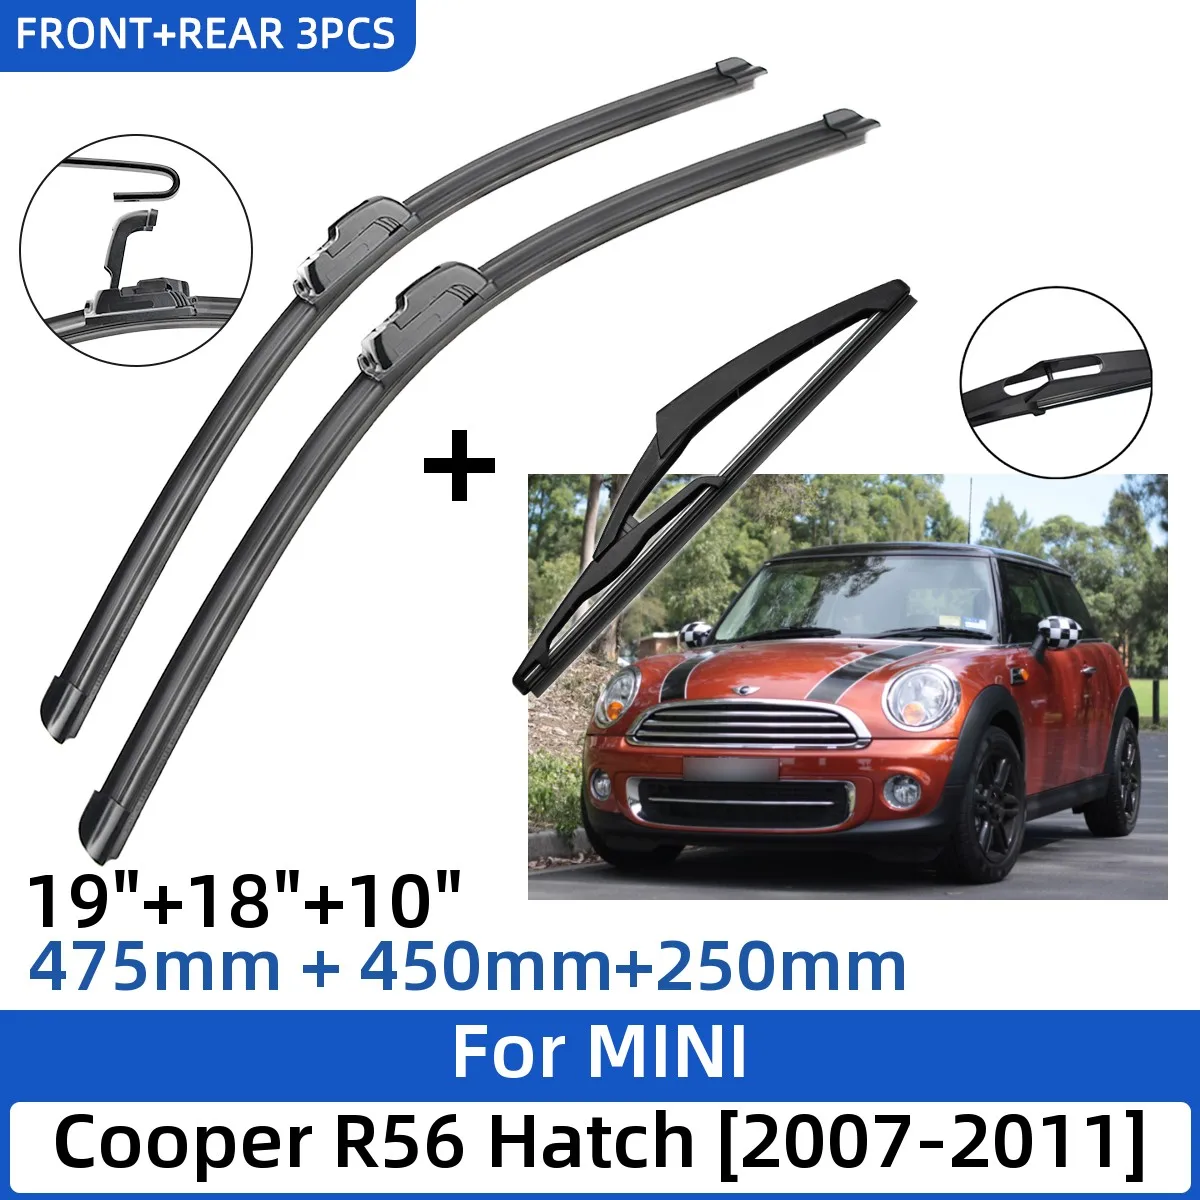 

3PCS For MINI Cooper R56 Hatch 2007-2011 19"+18"+10" Front Rear Wiper Blades Windshield Windscreen Window Cutter Accessories